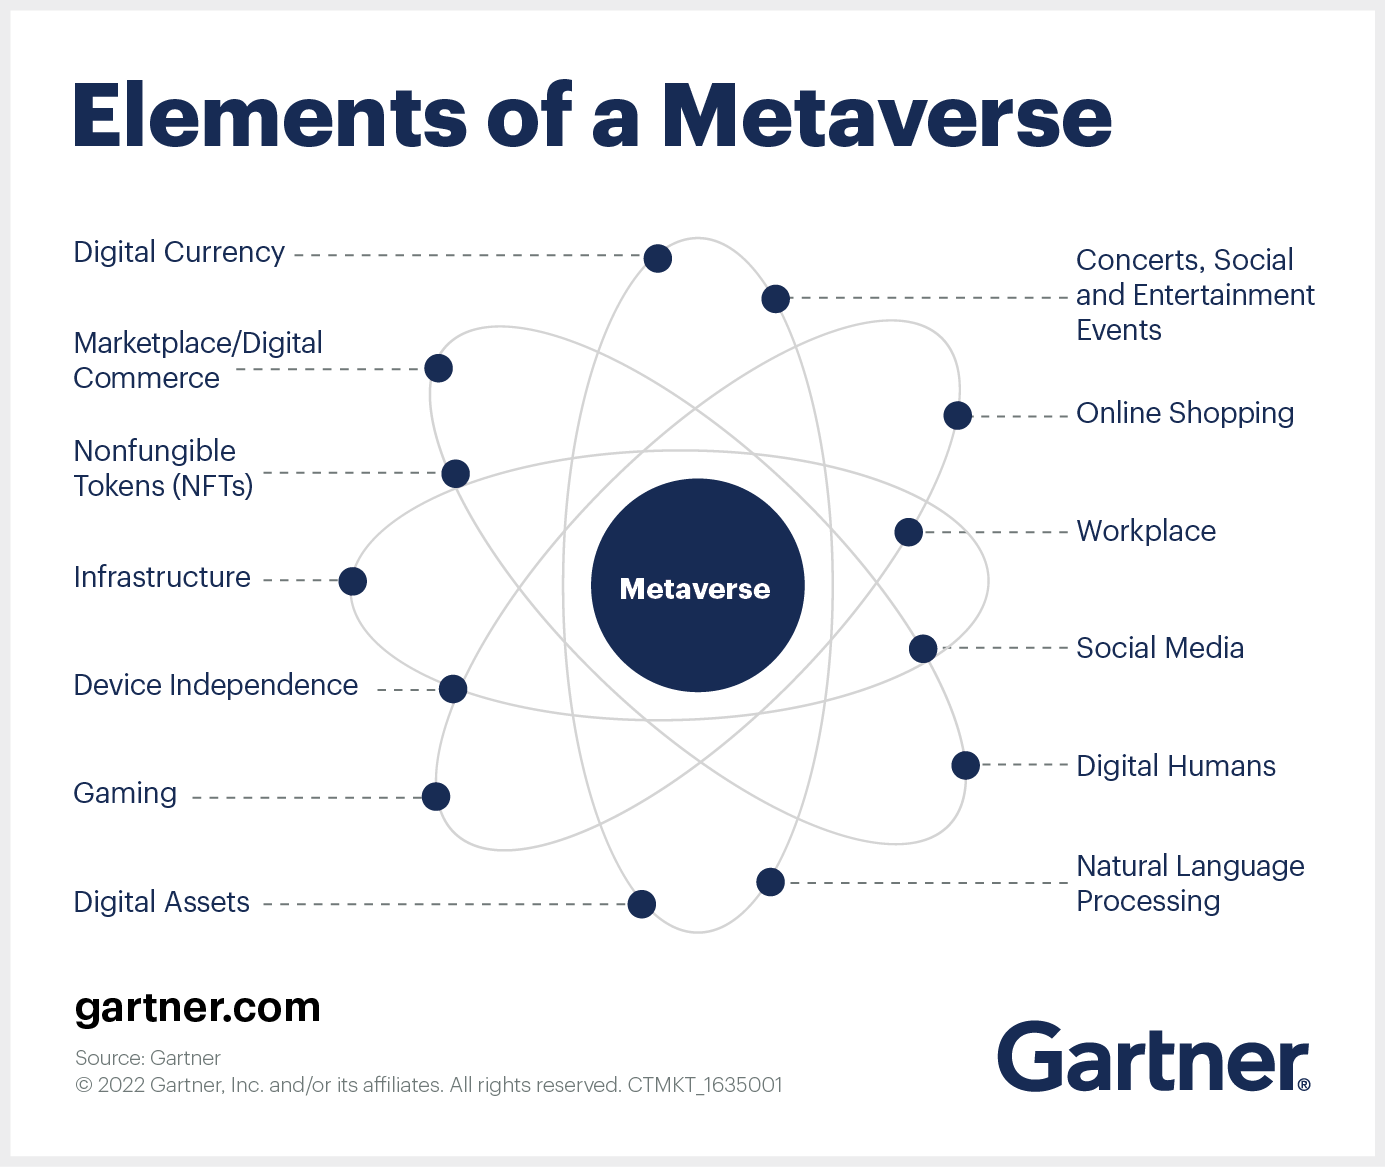 Gartner's Elements of a Metaverse